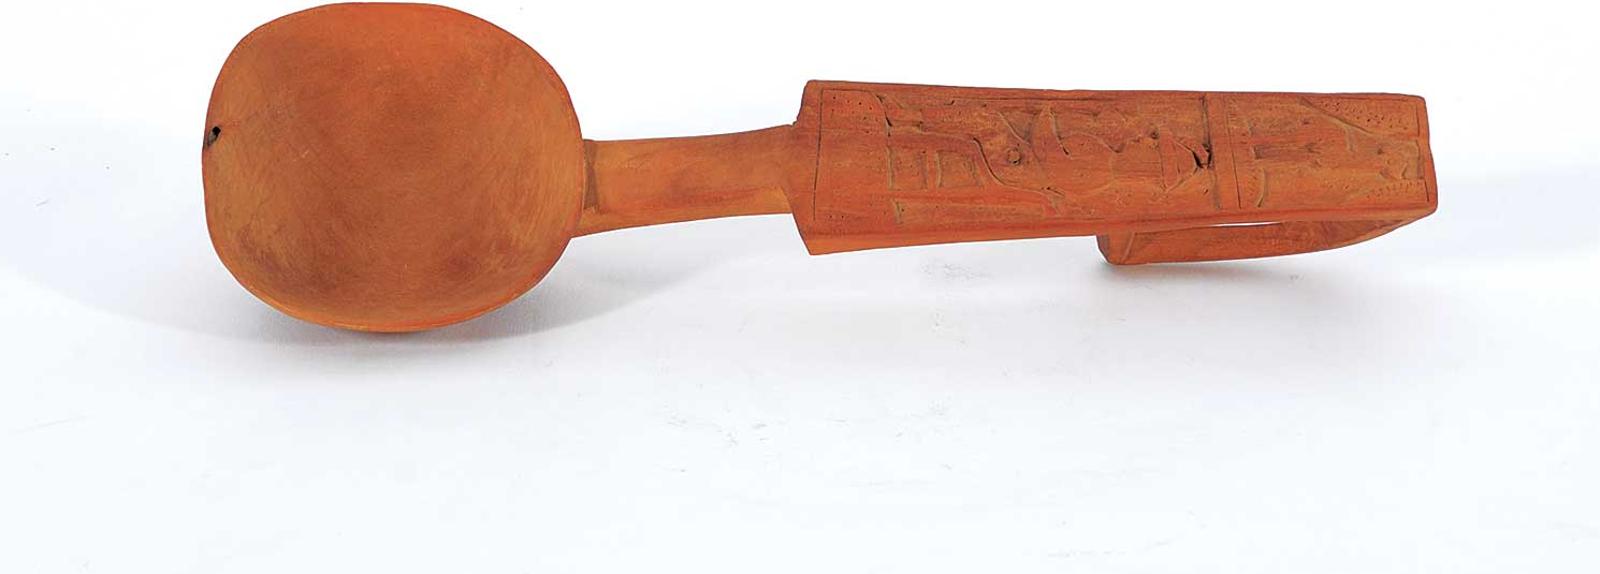 Folk Art School - Finnish Ladle with Carved Handle